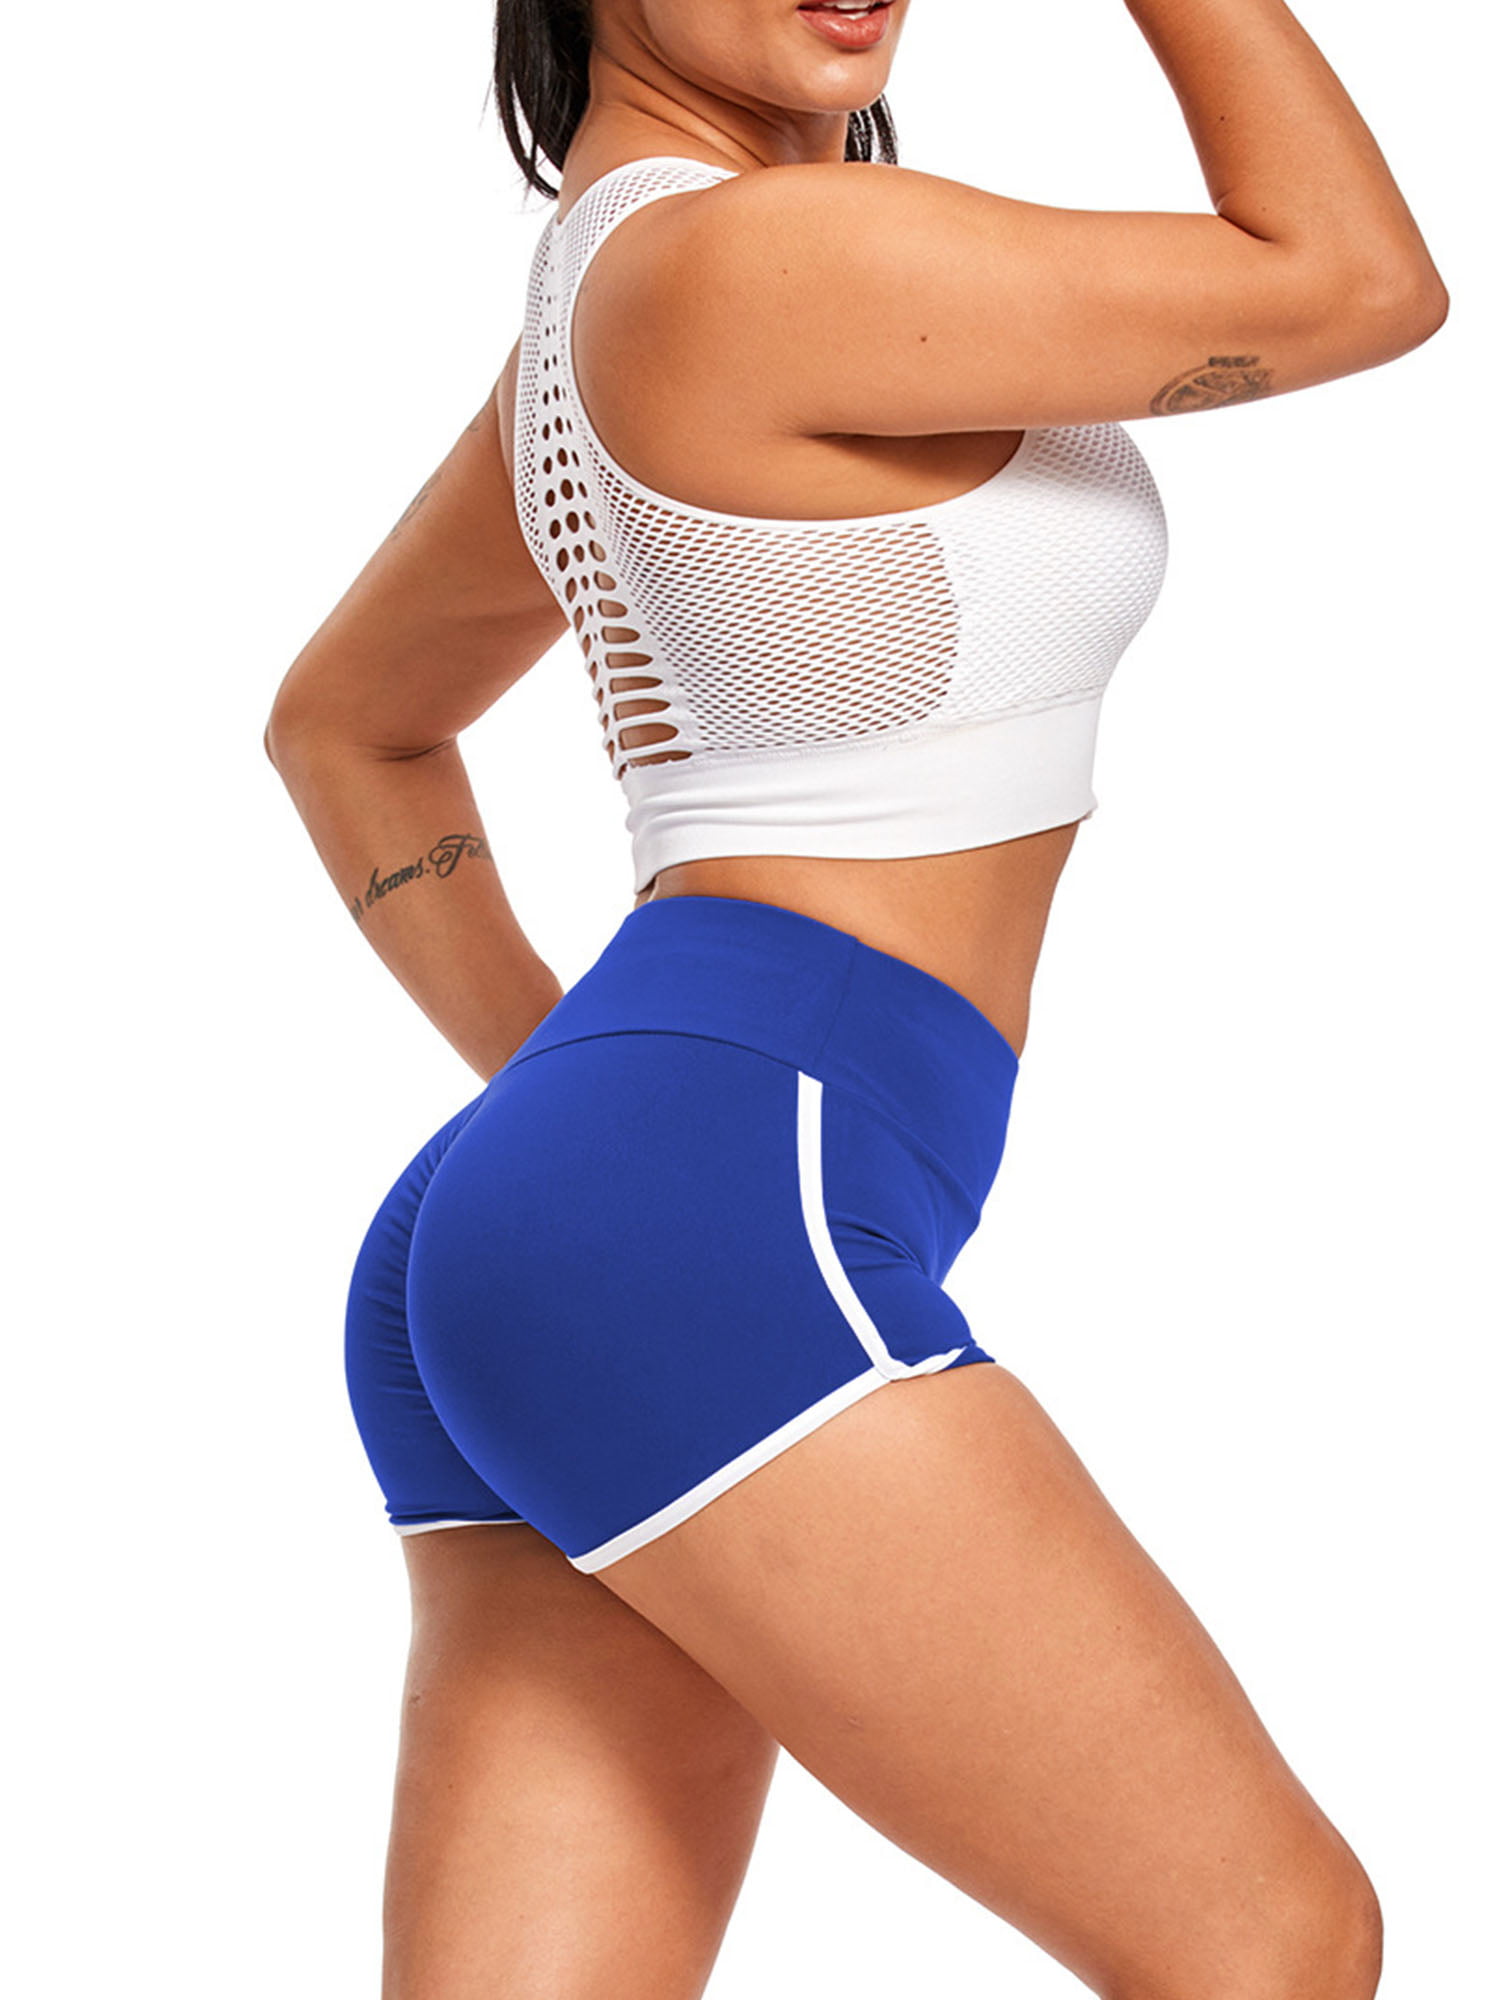 Women High Waist Shorts Gym Sport Running Sknniy Yoga Dance Fitness Short Pants 